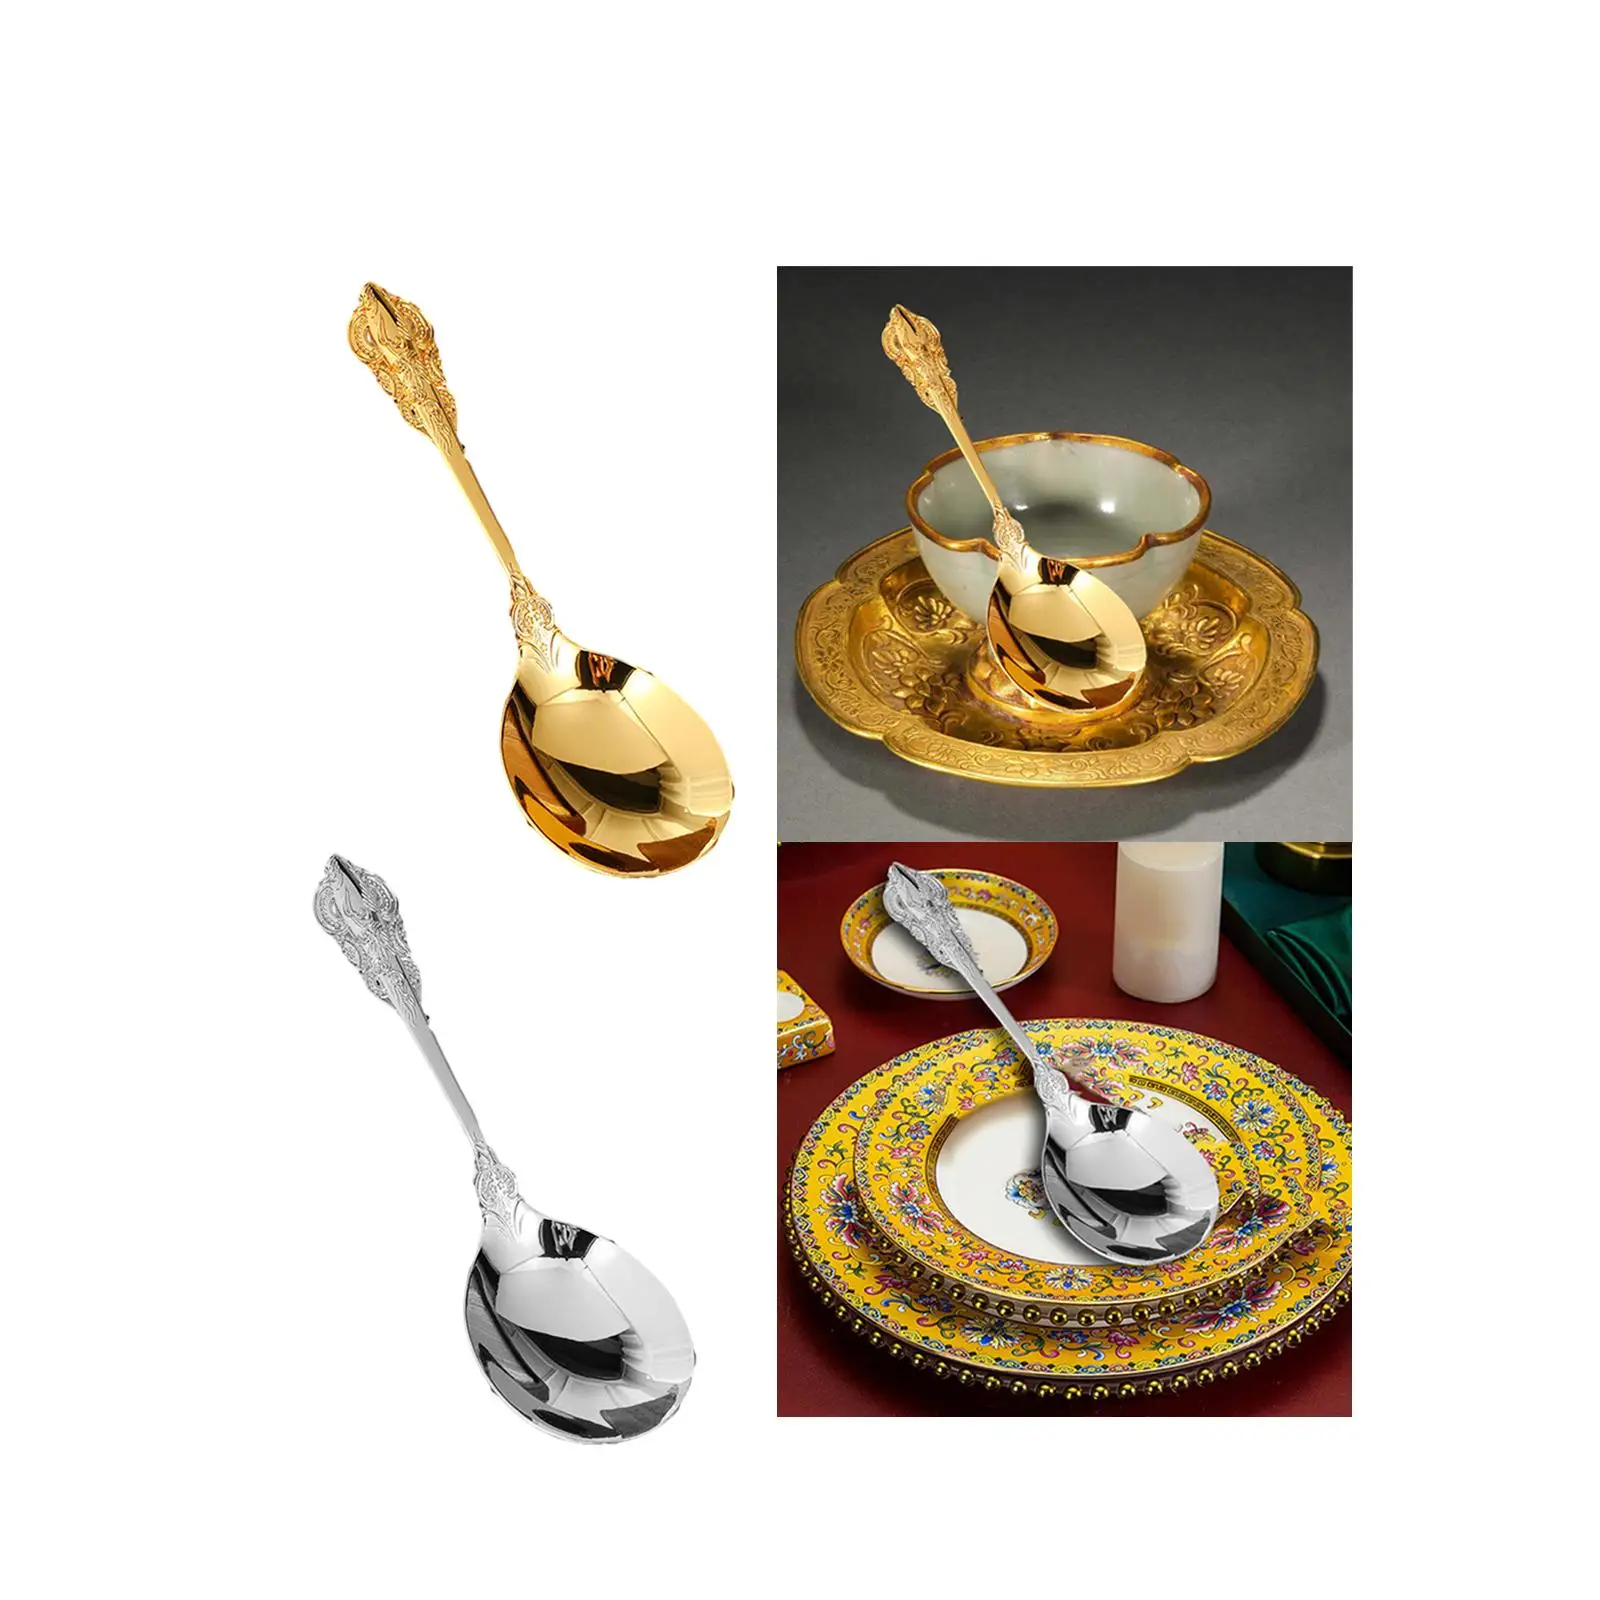 Dinner Spoon Catering Spoon, Metal Tableware Flatware Soup Spoon Serving Spoon for Party Buffet, Entertainment Weddings